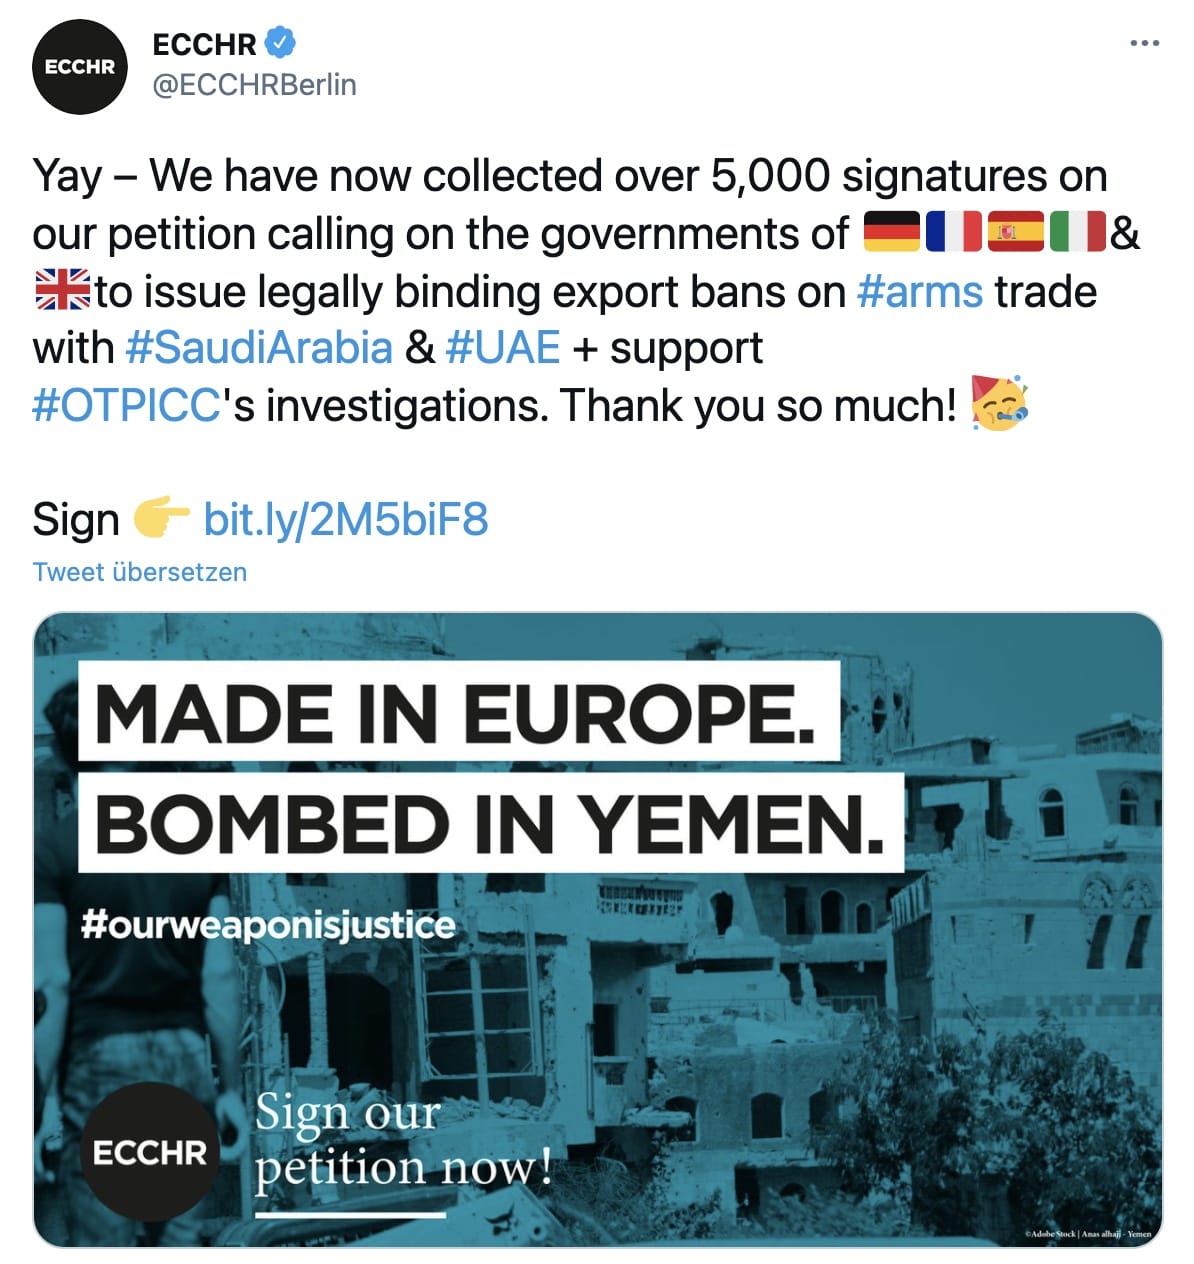 ECCHR KAMPAGNE PETITION Made in Europe Bombed in Yemen DIGITAL DONATION REBELKO MARKETING DESIGN KONZEPT AGENTUR AACHEN ADVERT SOCIAL MEDIA INSTAGRAM POST TWITTER 3